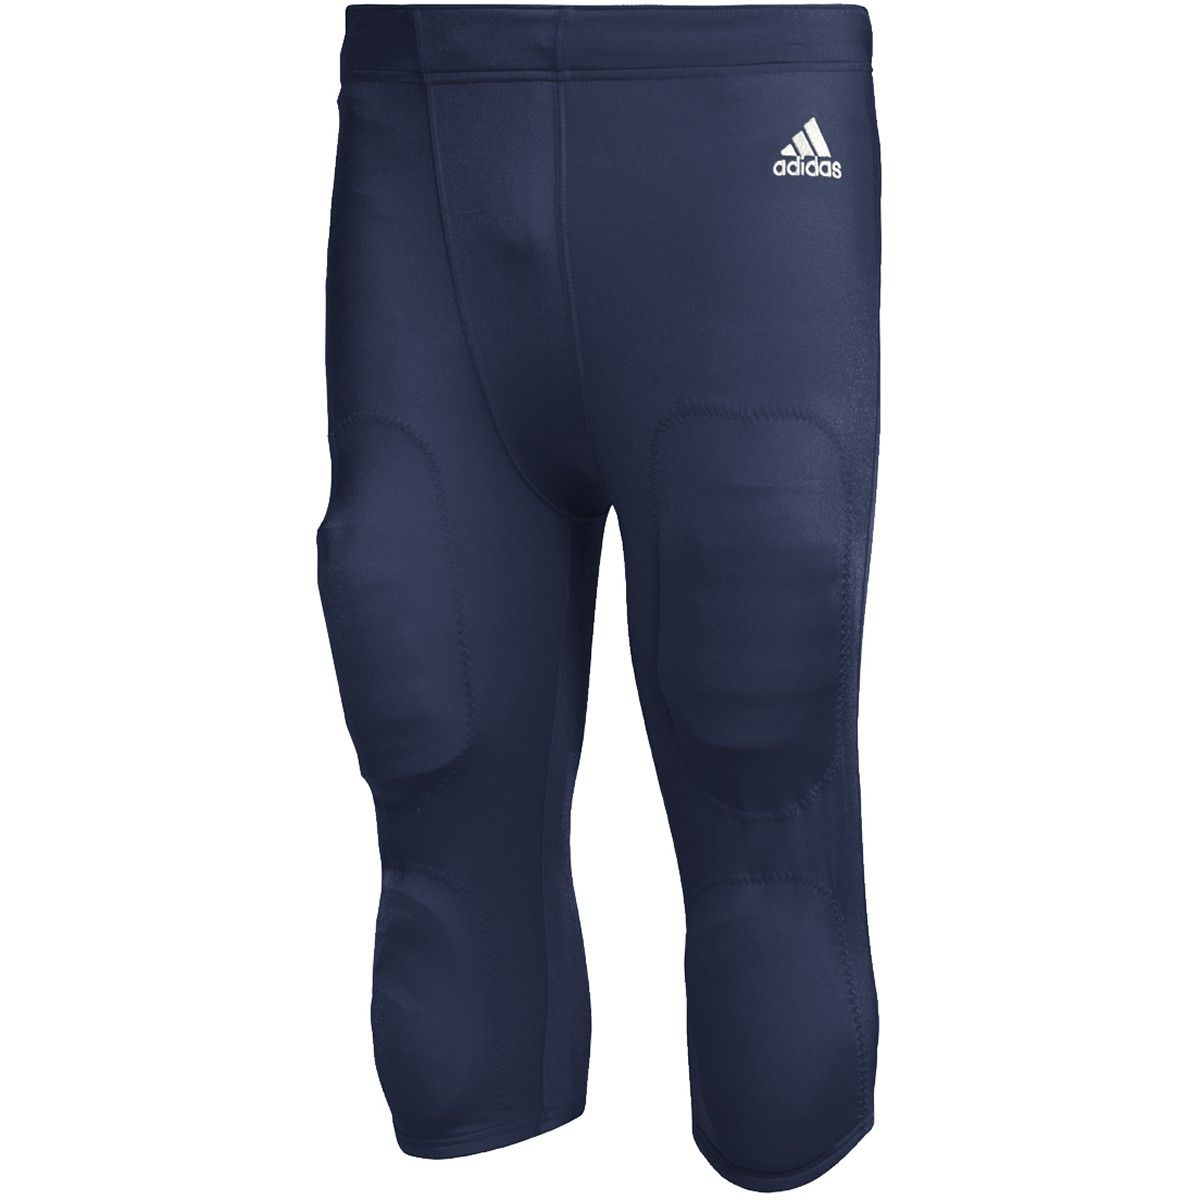 Adidas Men's Climalite Audible Football Jersey